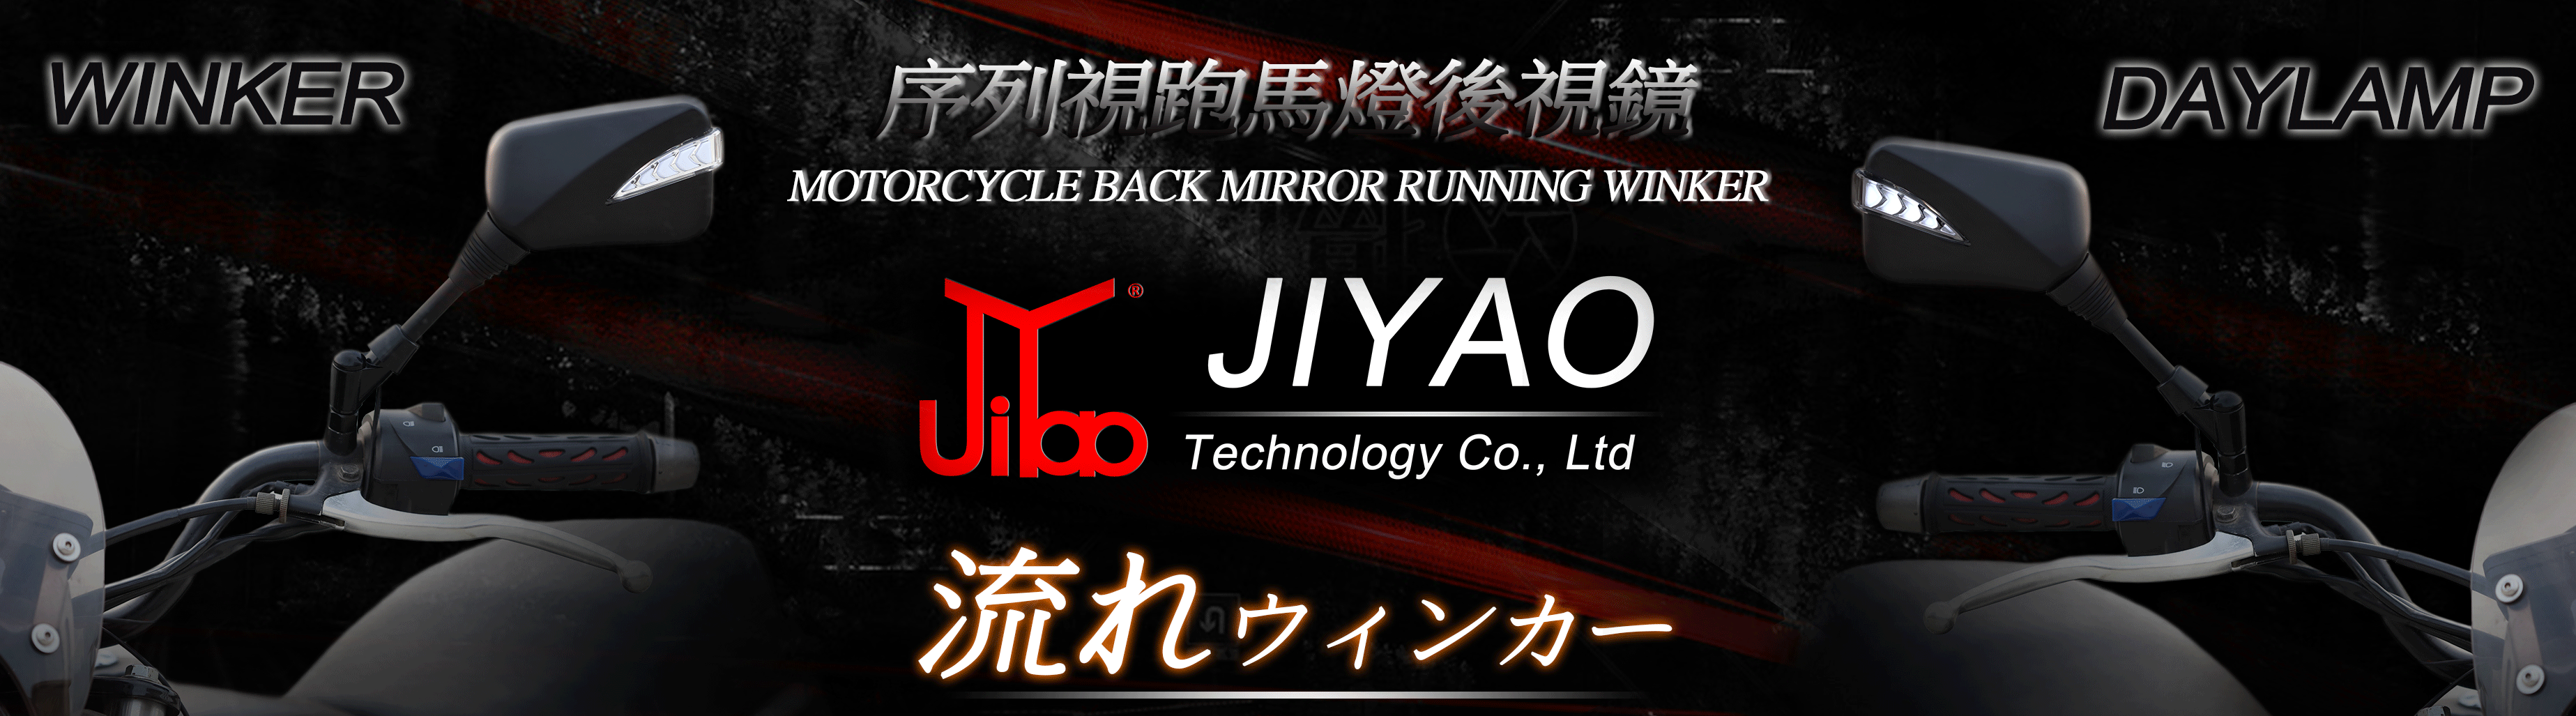 JY005-M バックミラー流れウィンカー